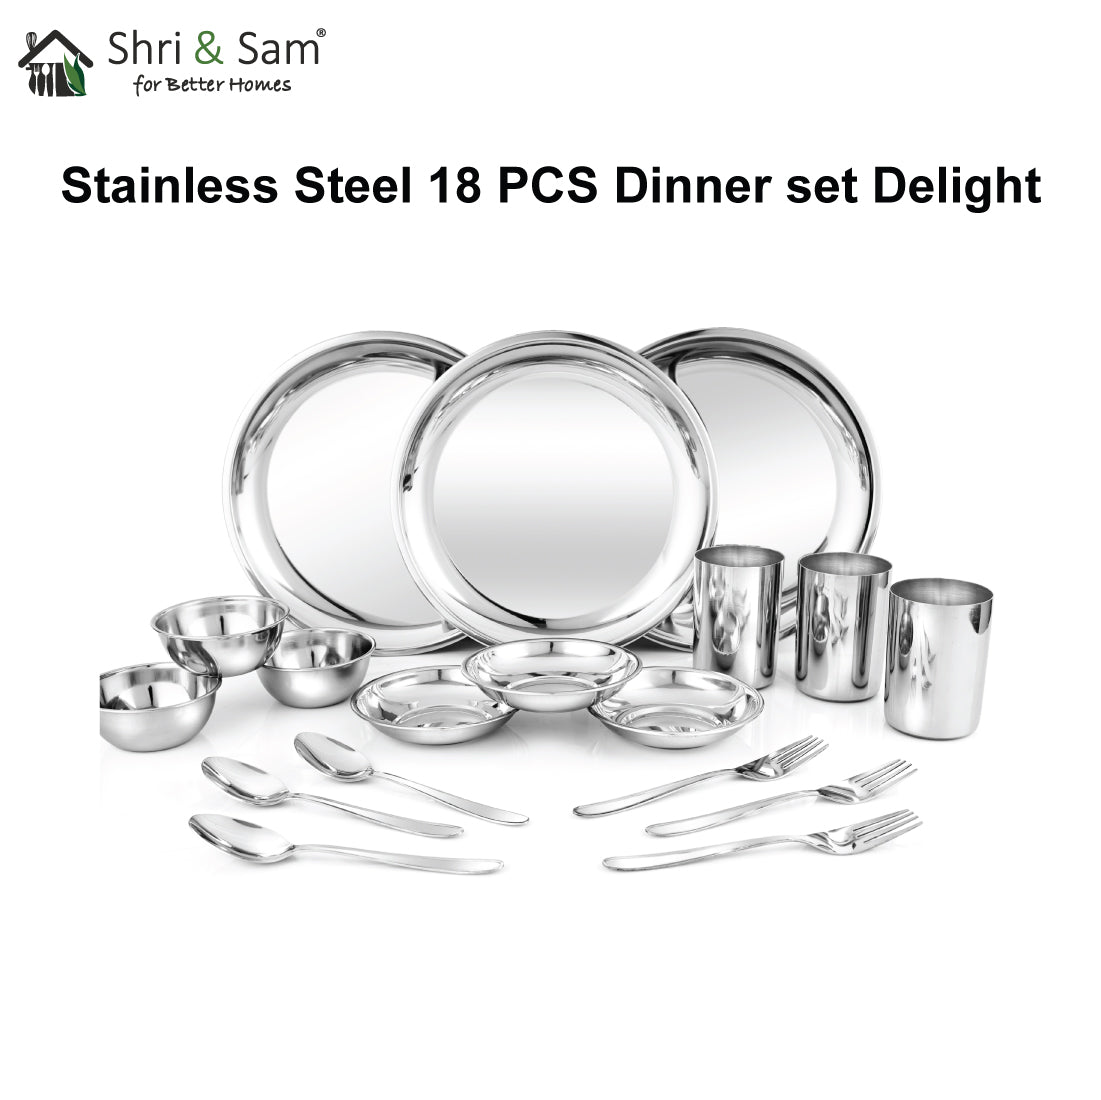 Stainless Steel 18 PCS Dinner set (3 People) Delight